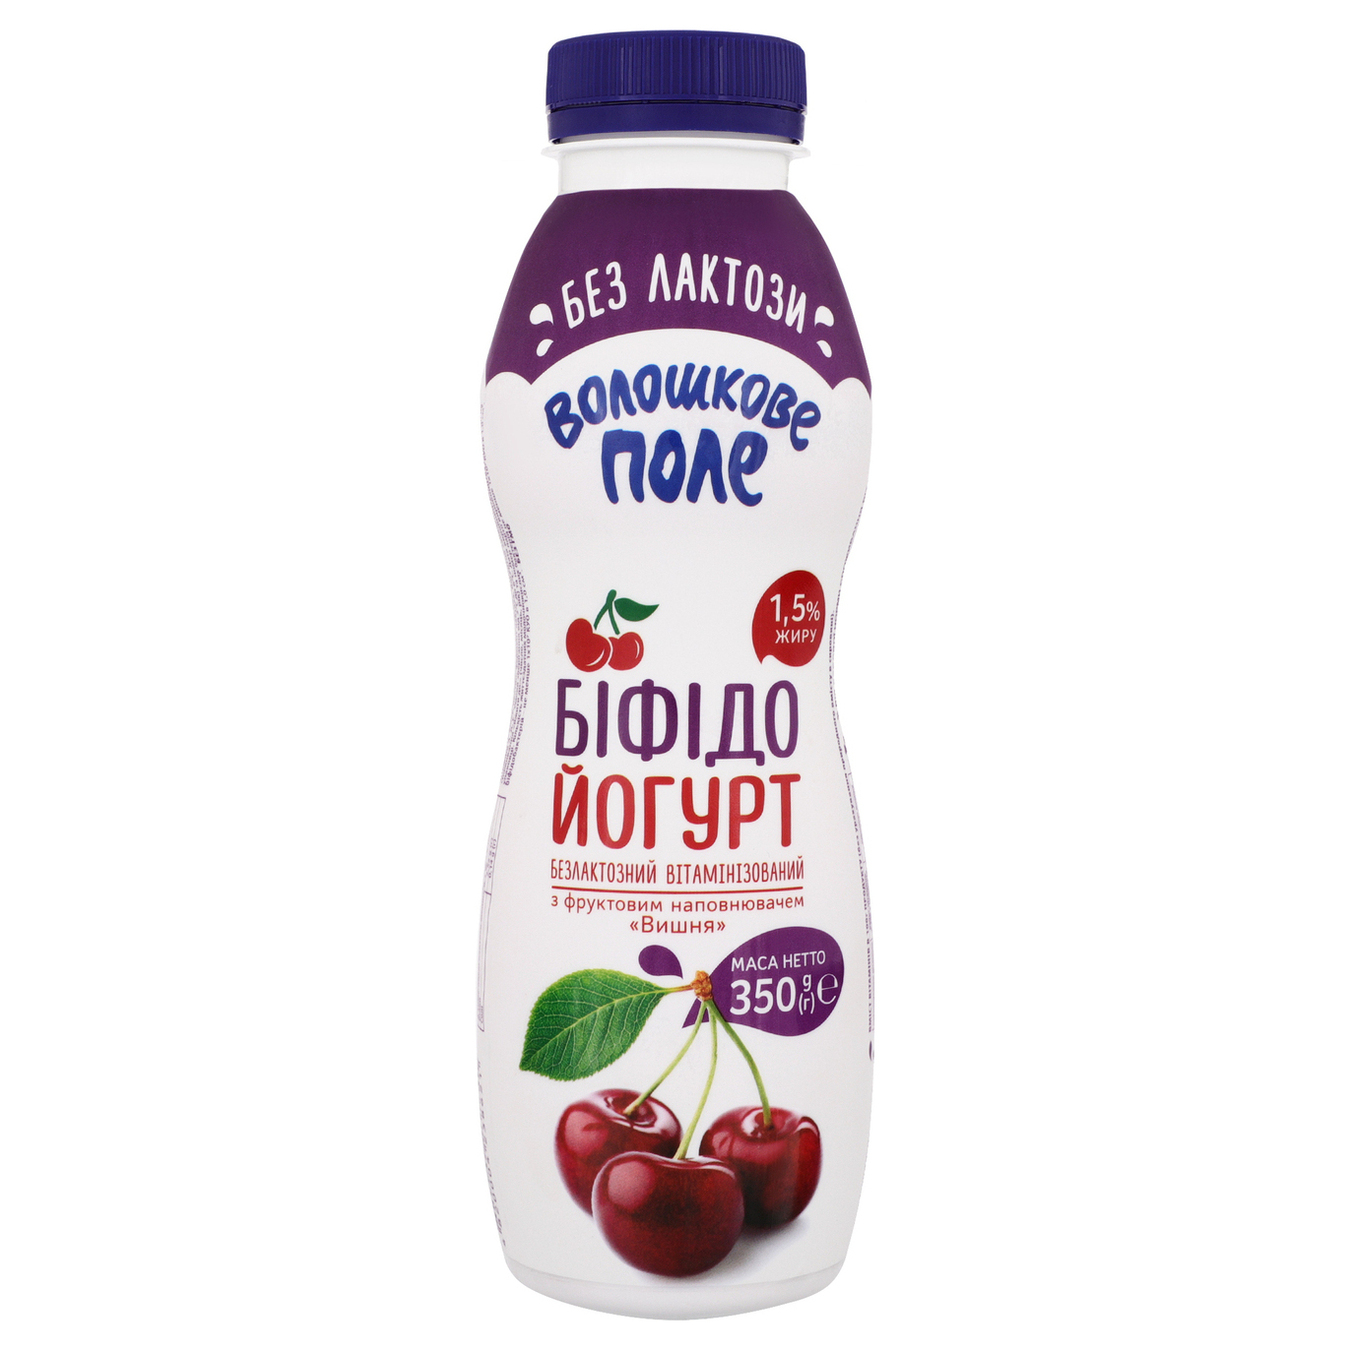 Voloshkove pole Bifidoyogurt Cherry lactose-free 1,5% 350g